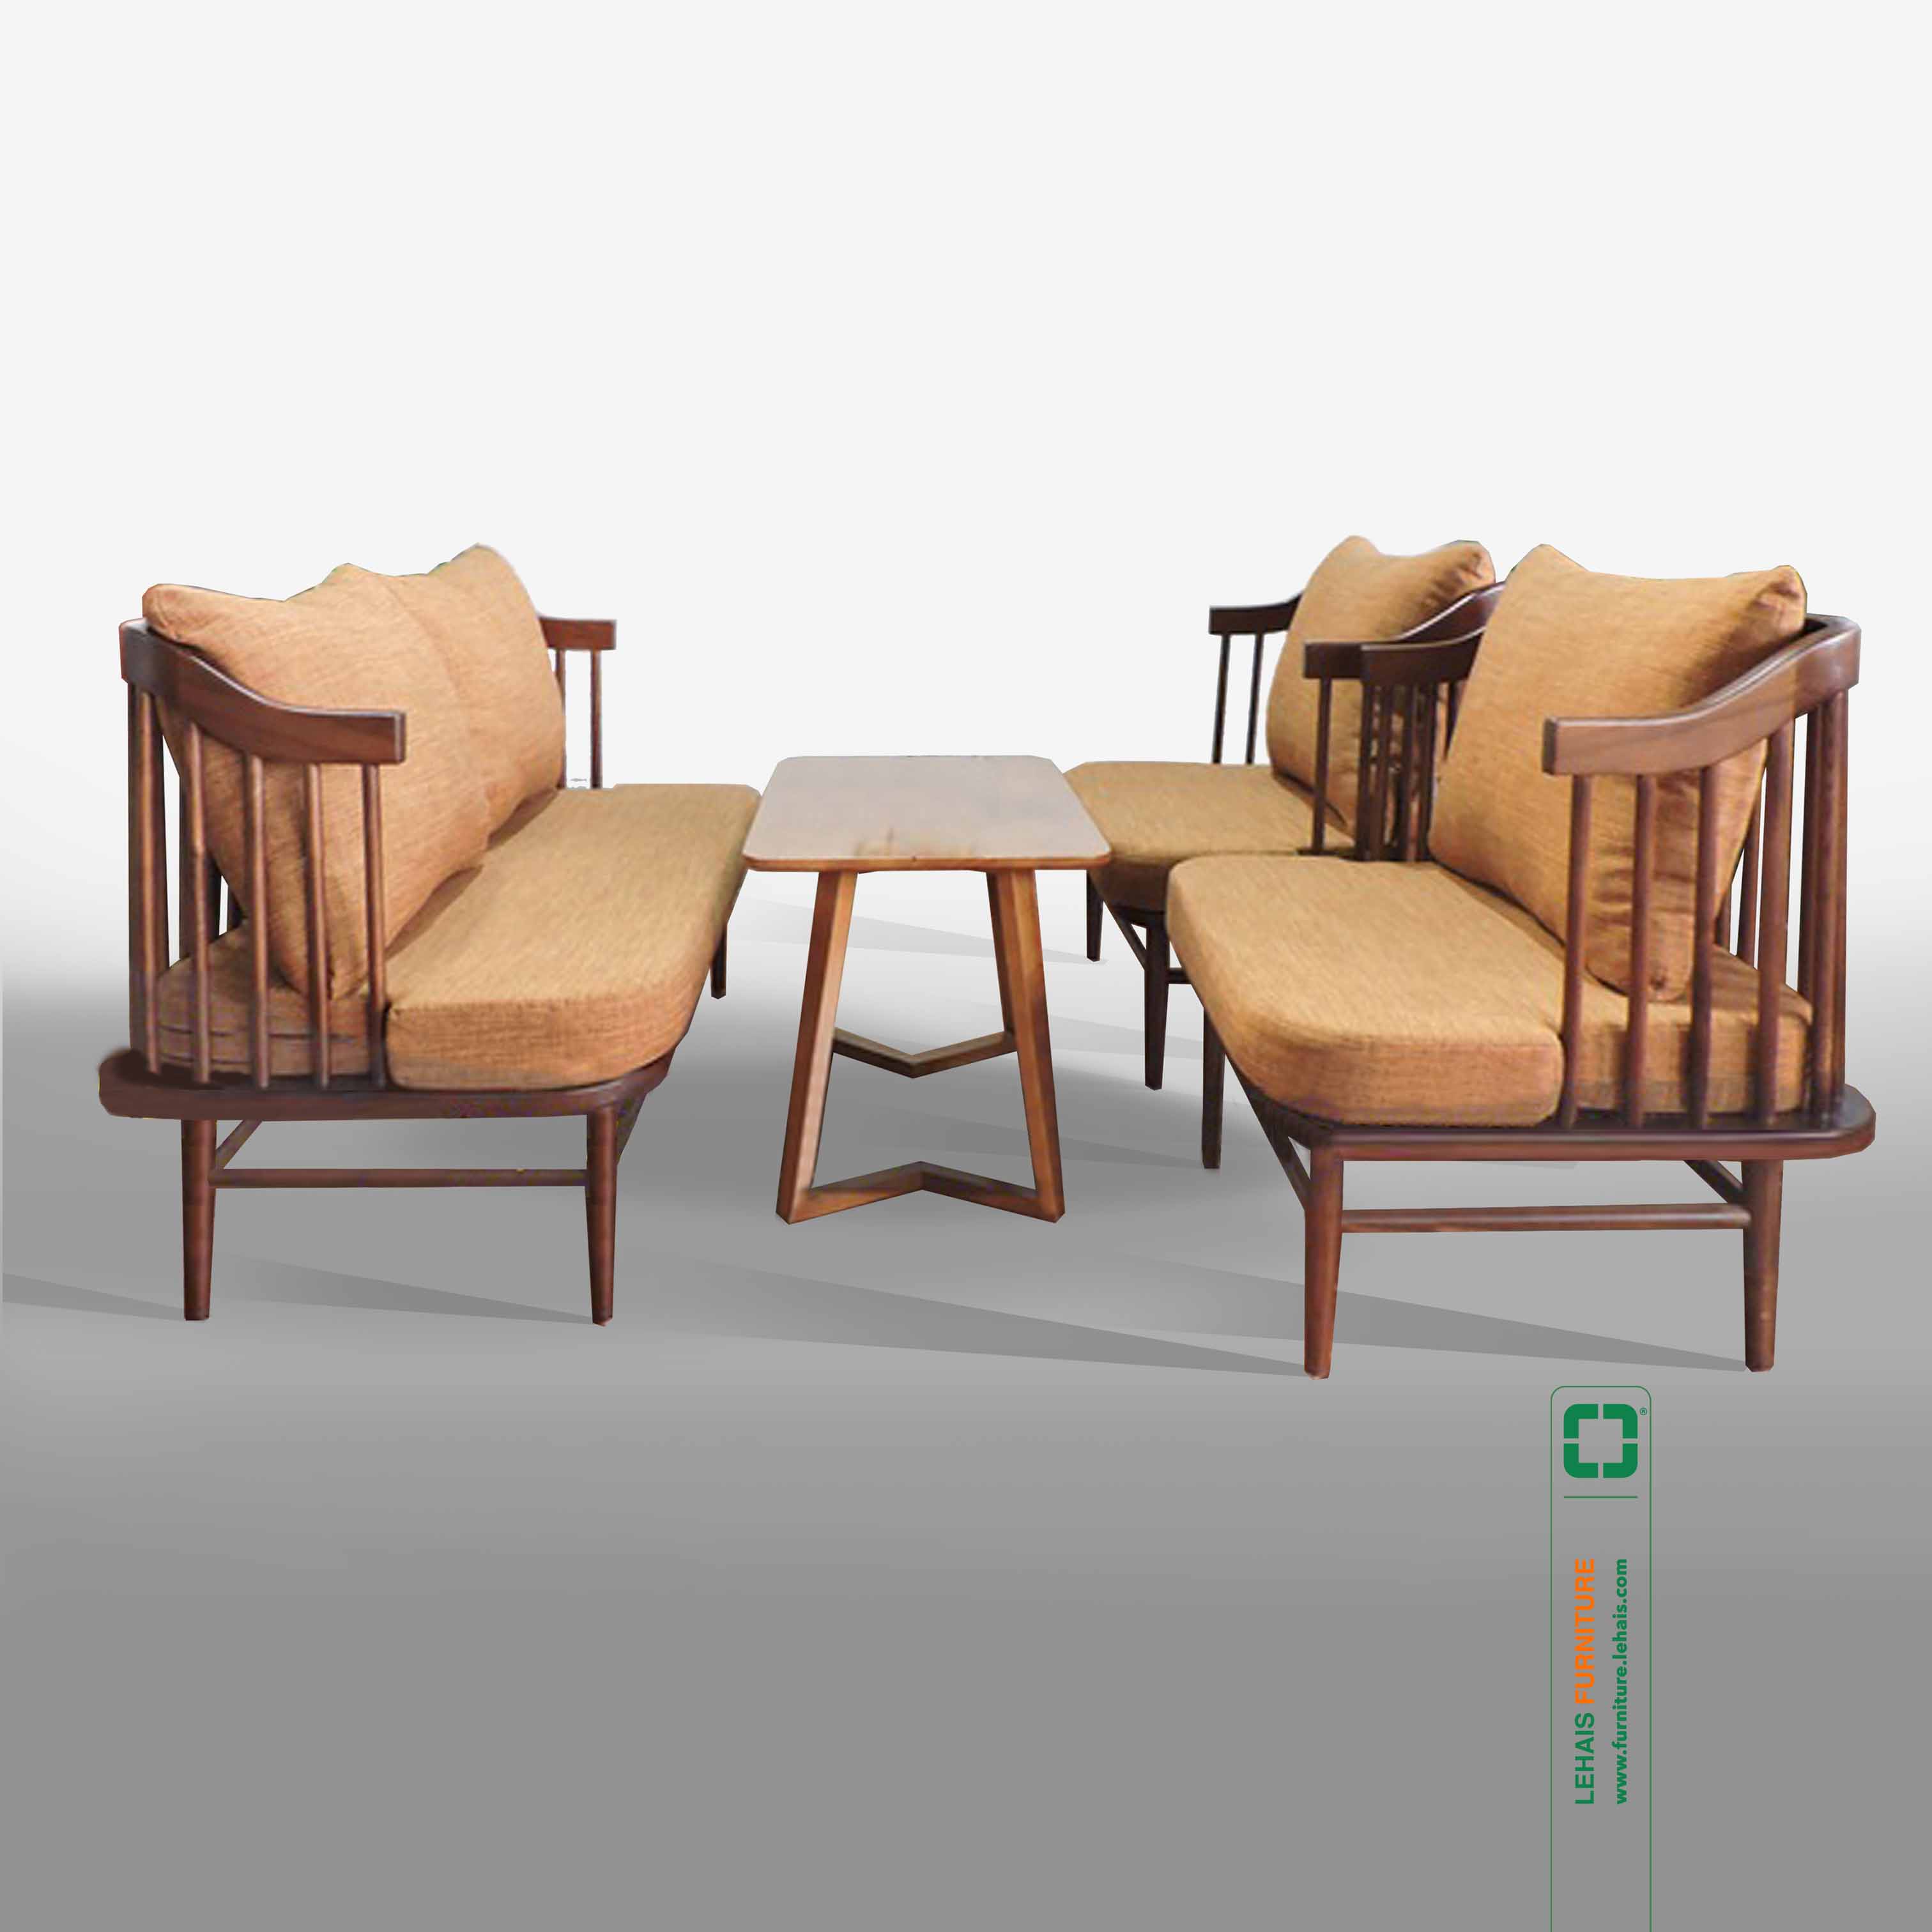 Twist table and chair Cube - BG9LHFU